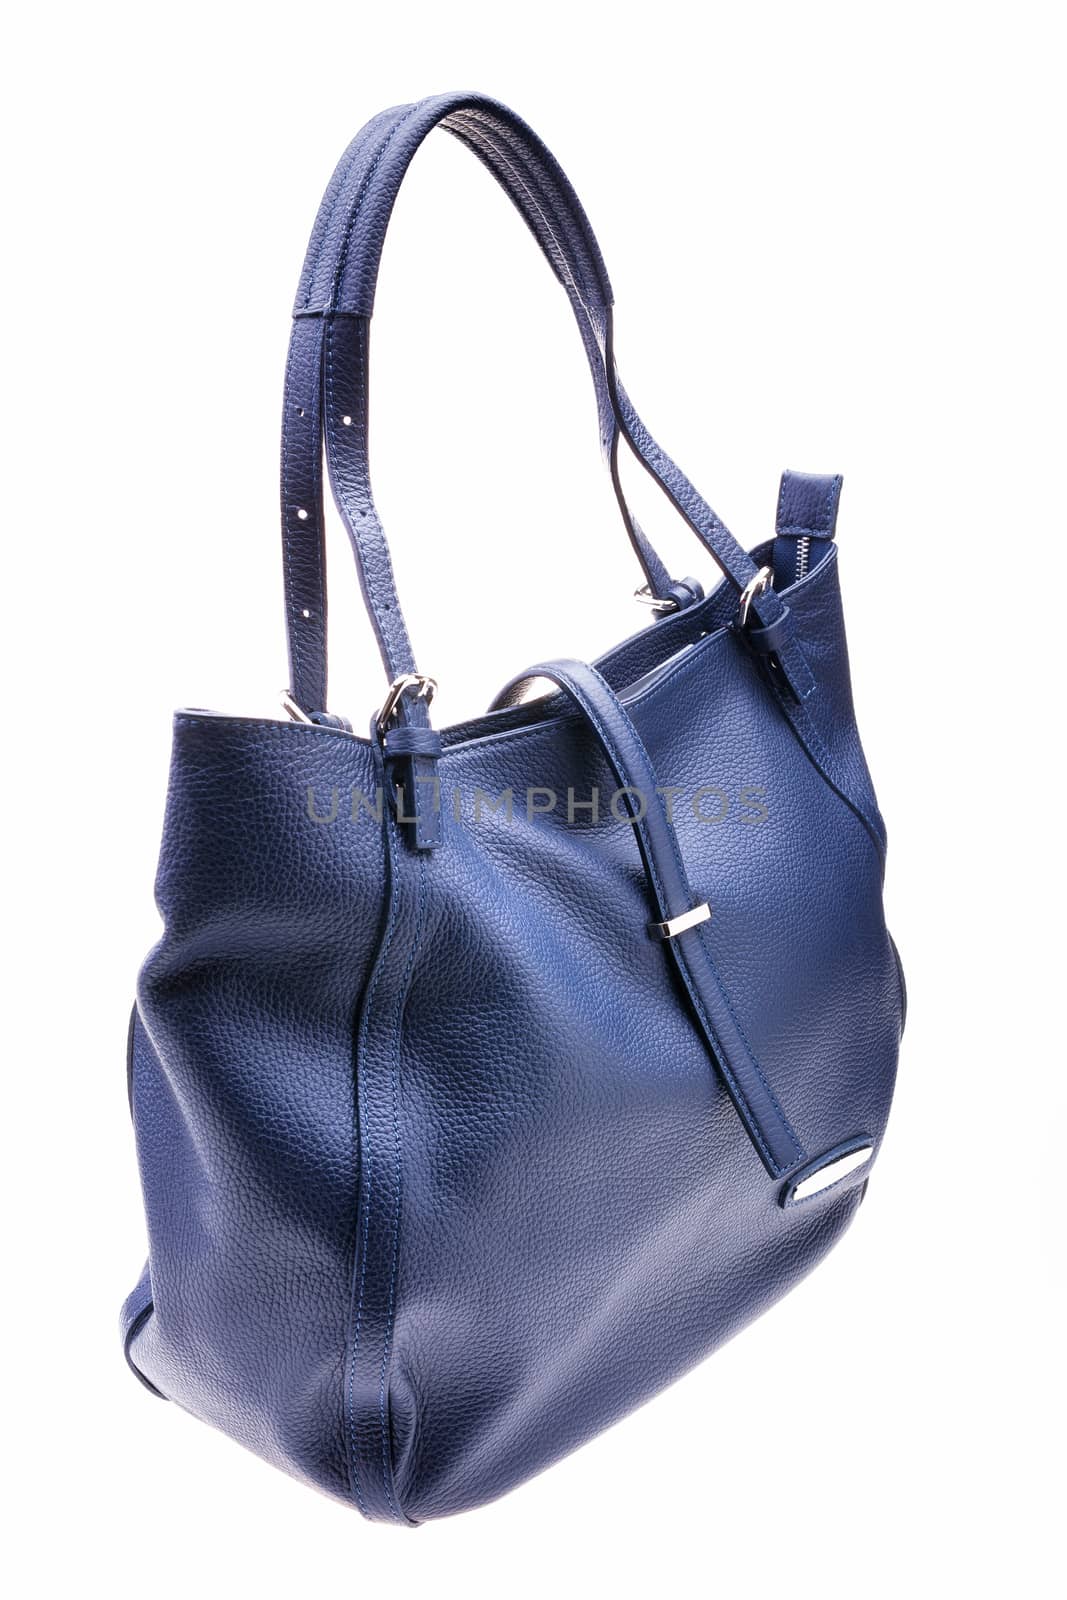 Blue womens bag isolated on white background. by igor_stramyk